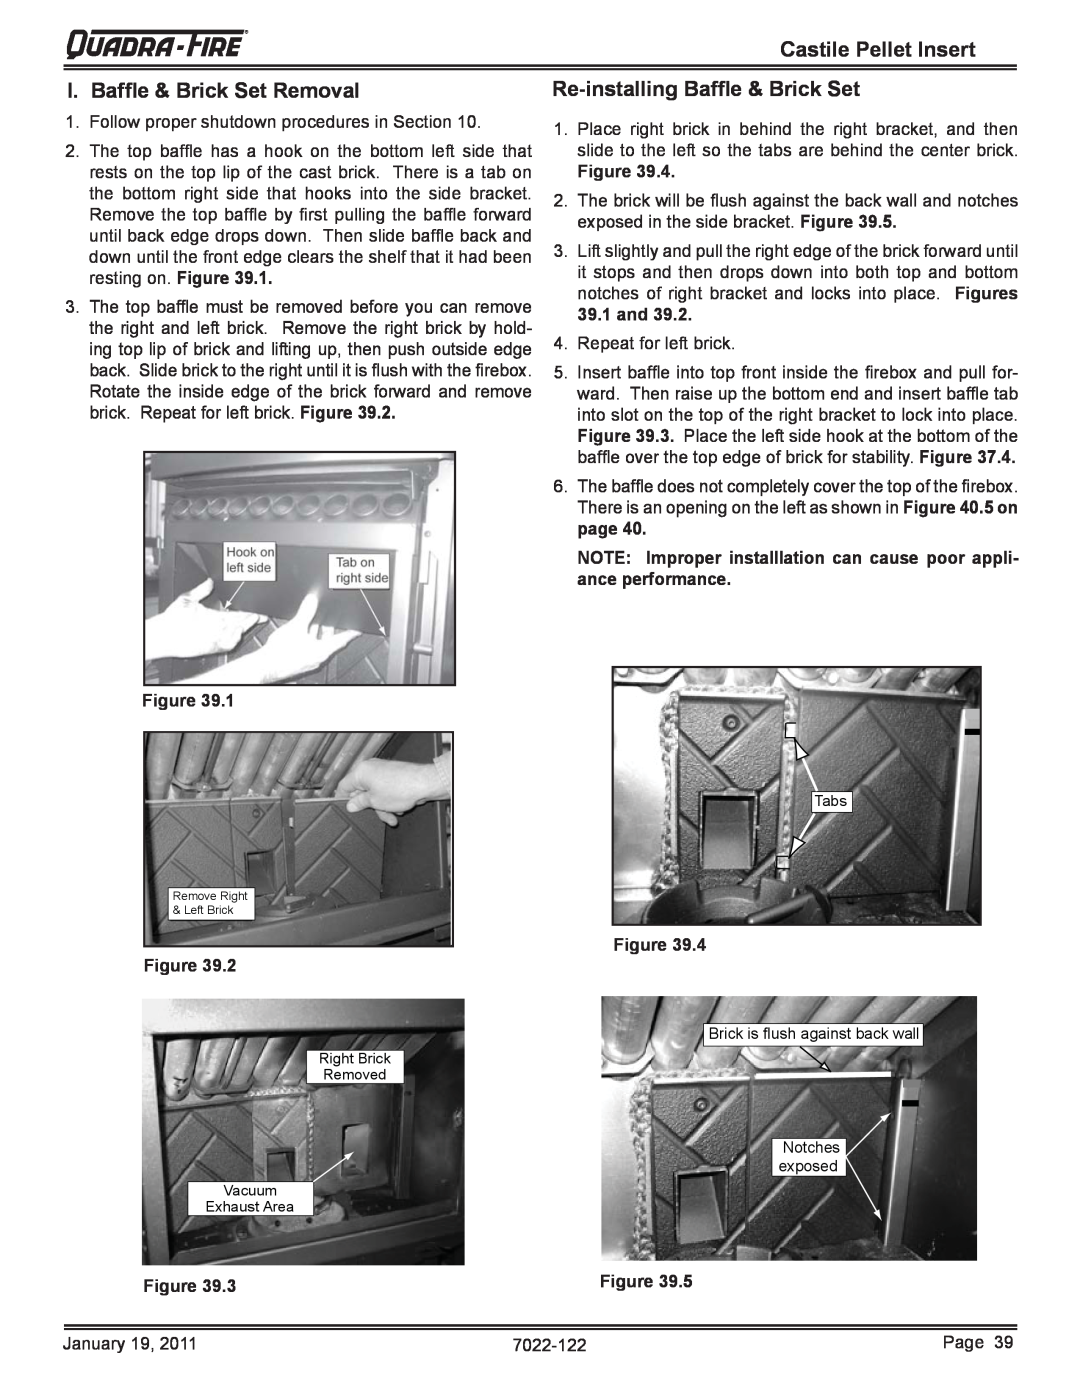 Quadra-Fire CASTILEI-MBK I. Bafﬂe & Brick Set Removal, Re-installingBafﬂe & Brick Set, Castile Pellet Insert, Figure 